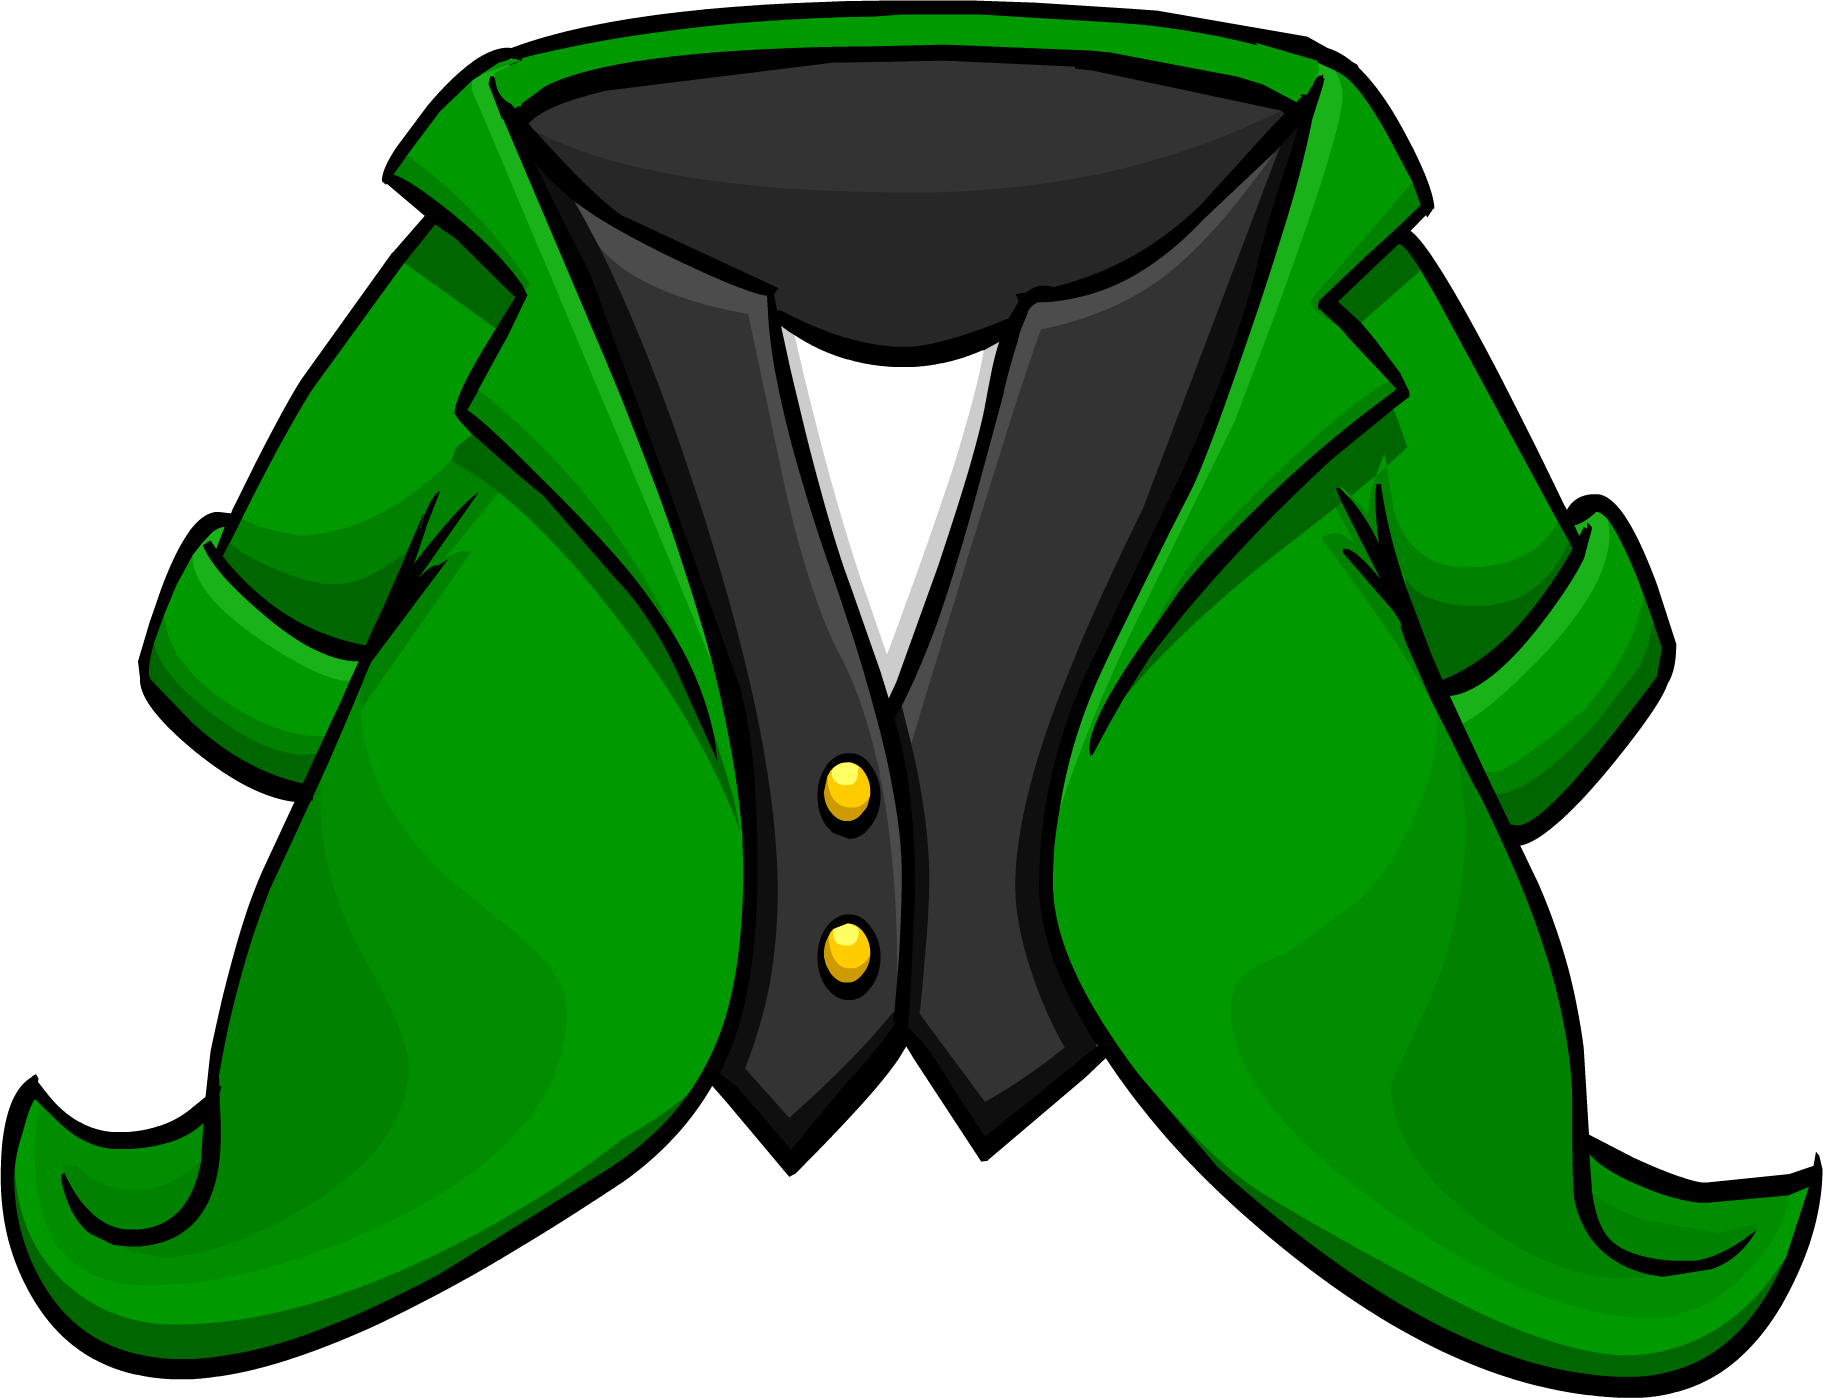 Leprechaun Tuxedo - Club Penguin Wiki - The free, editable encyclopedia